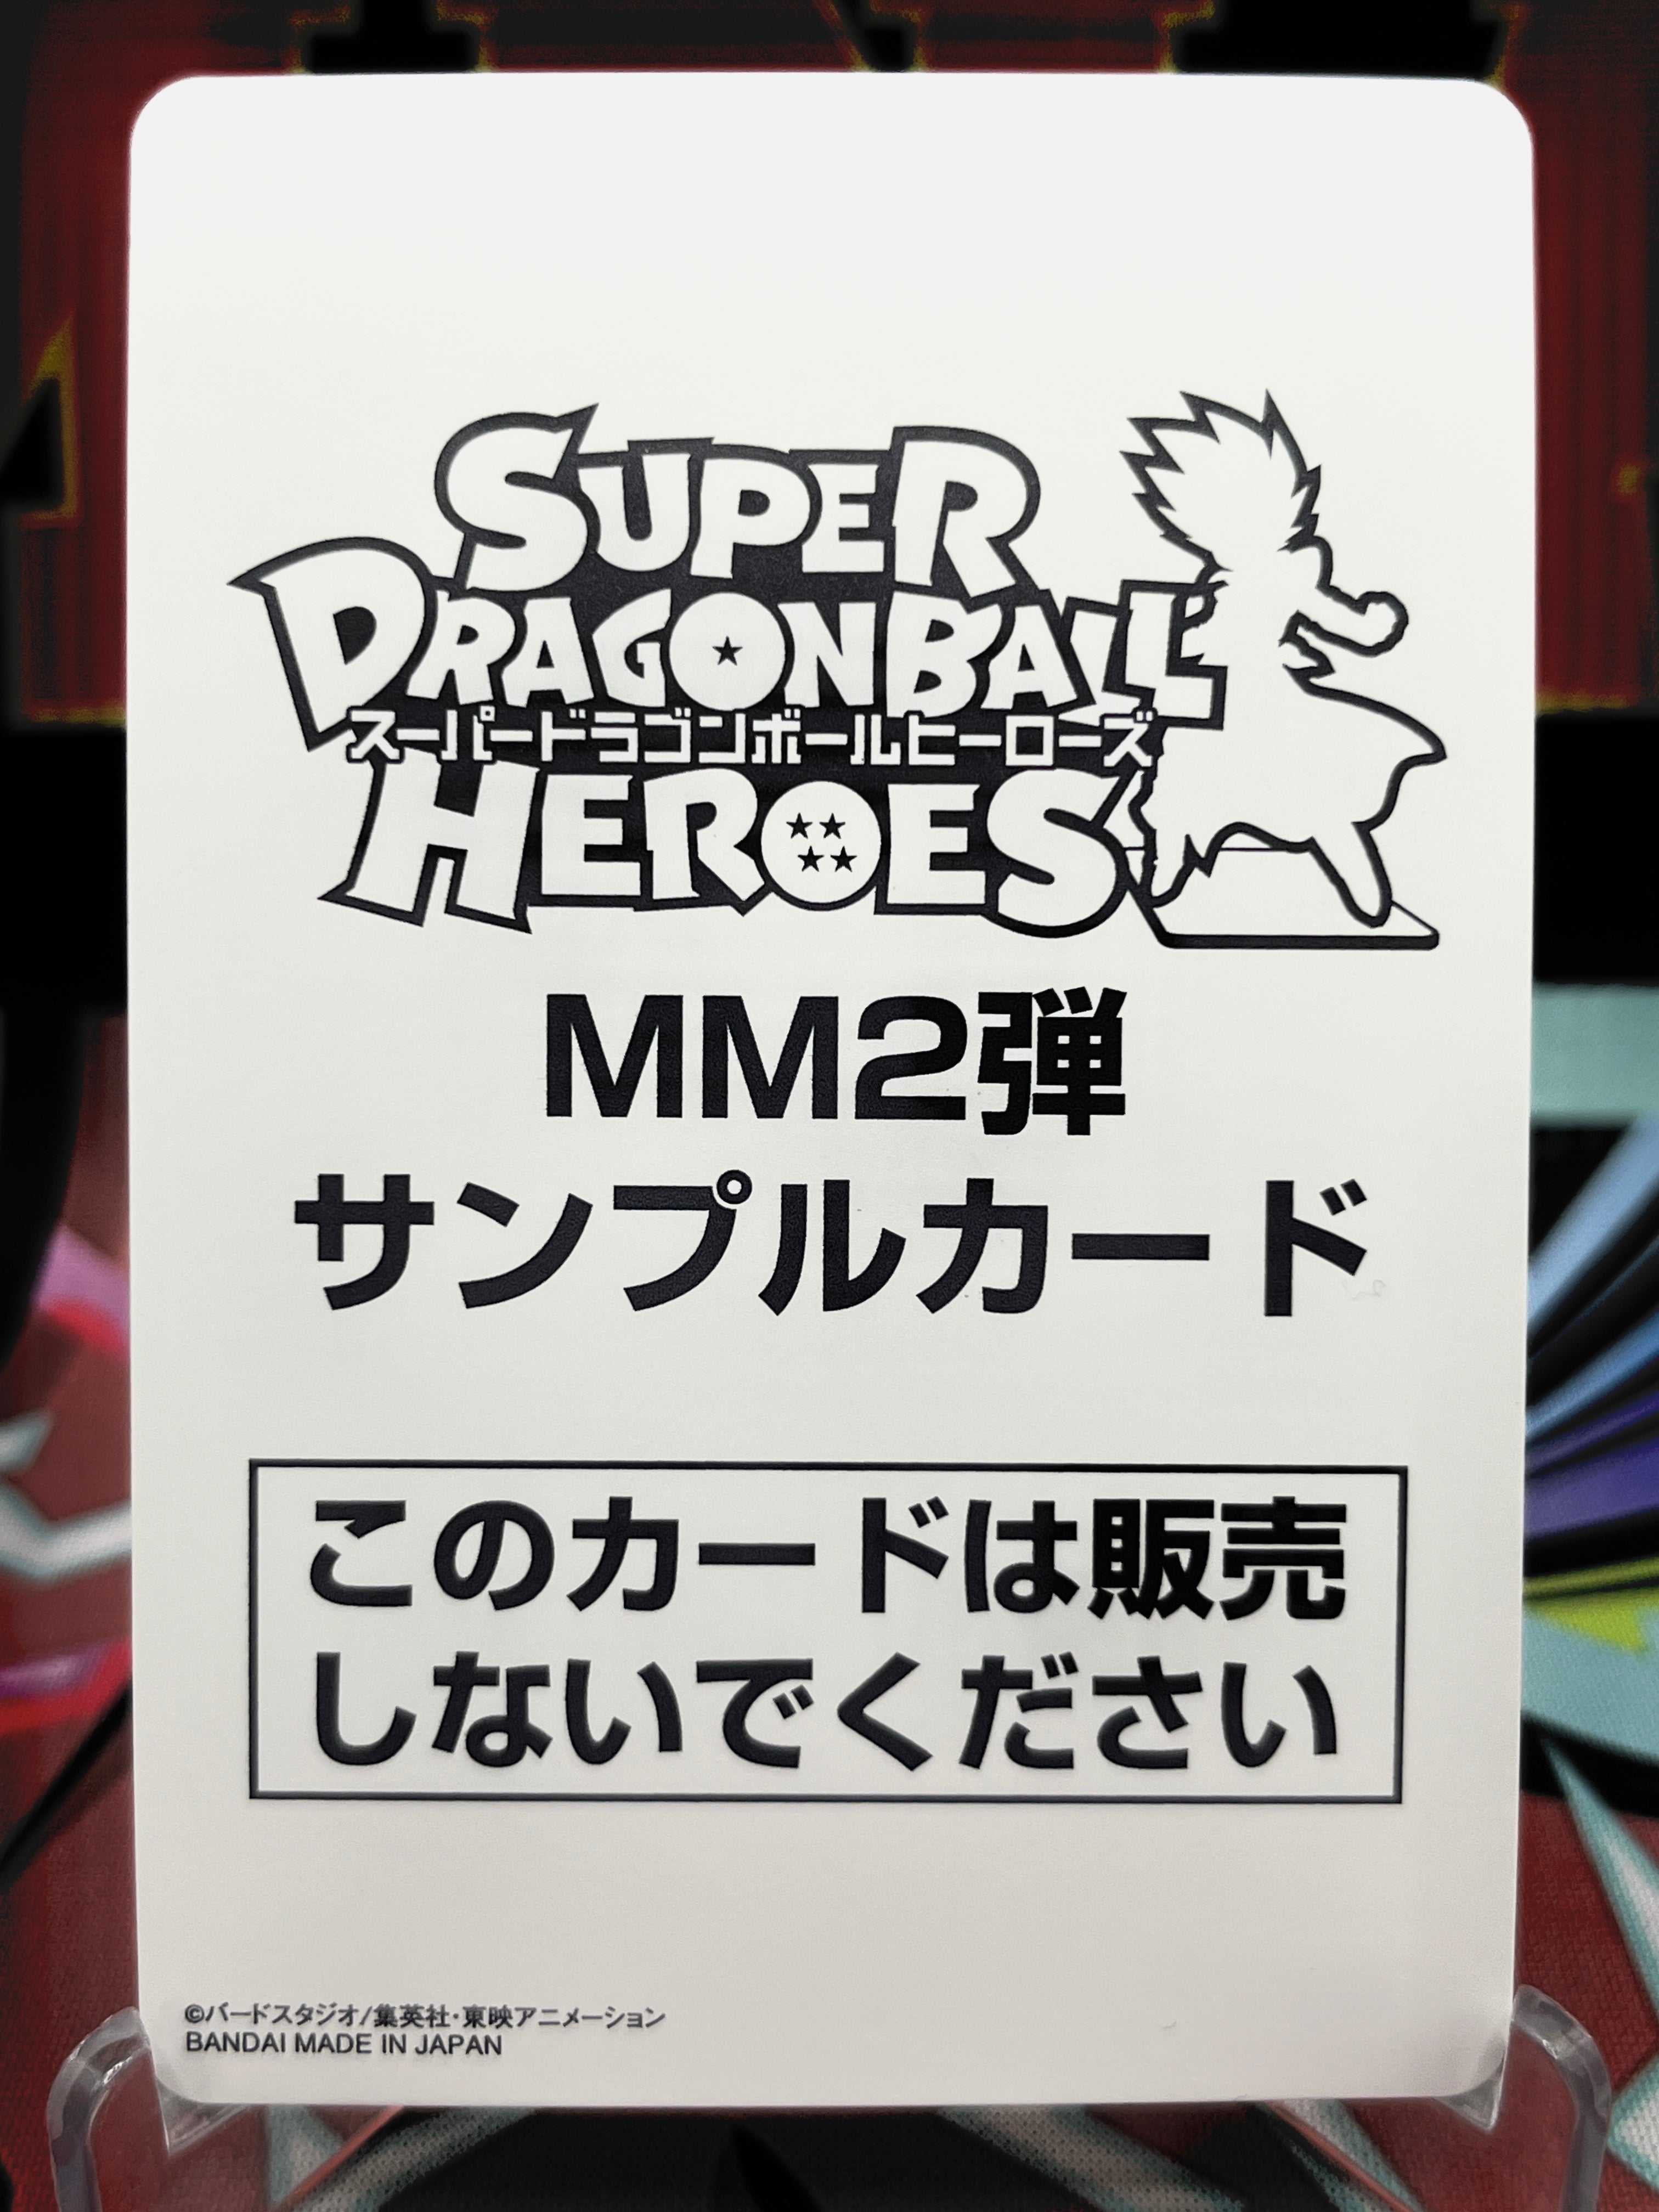 MM2-CP1 Son Goku: Boyhood CP SAMPLE (2024)